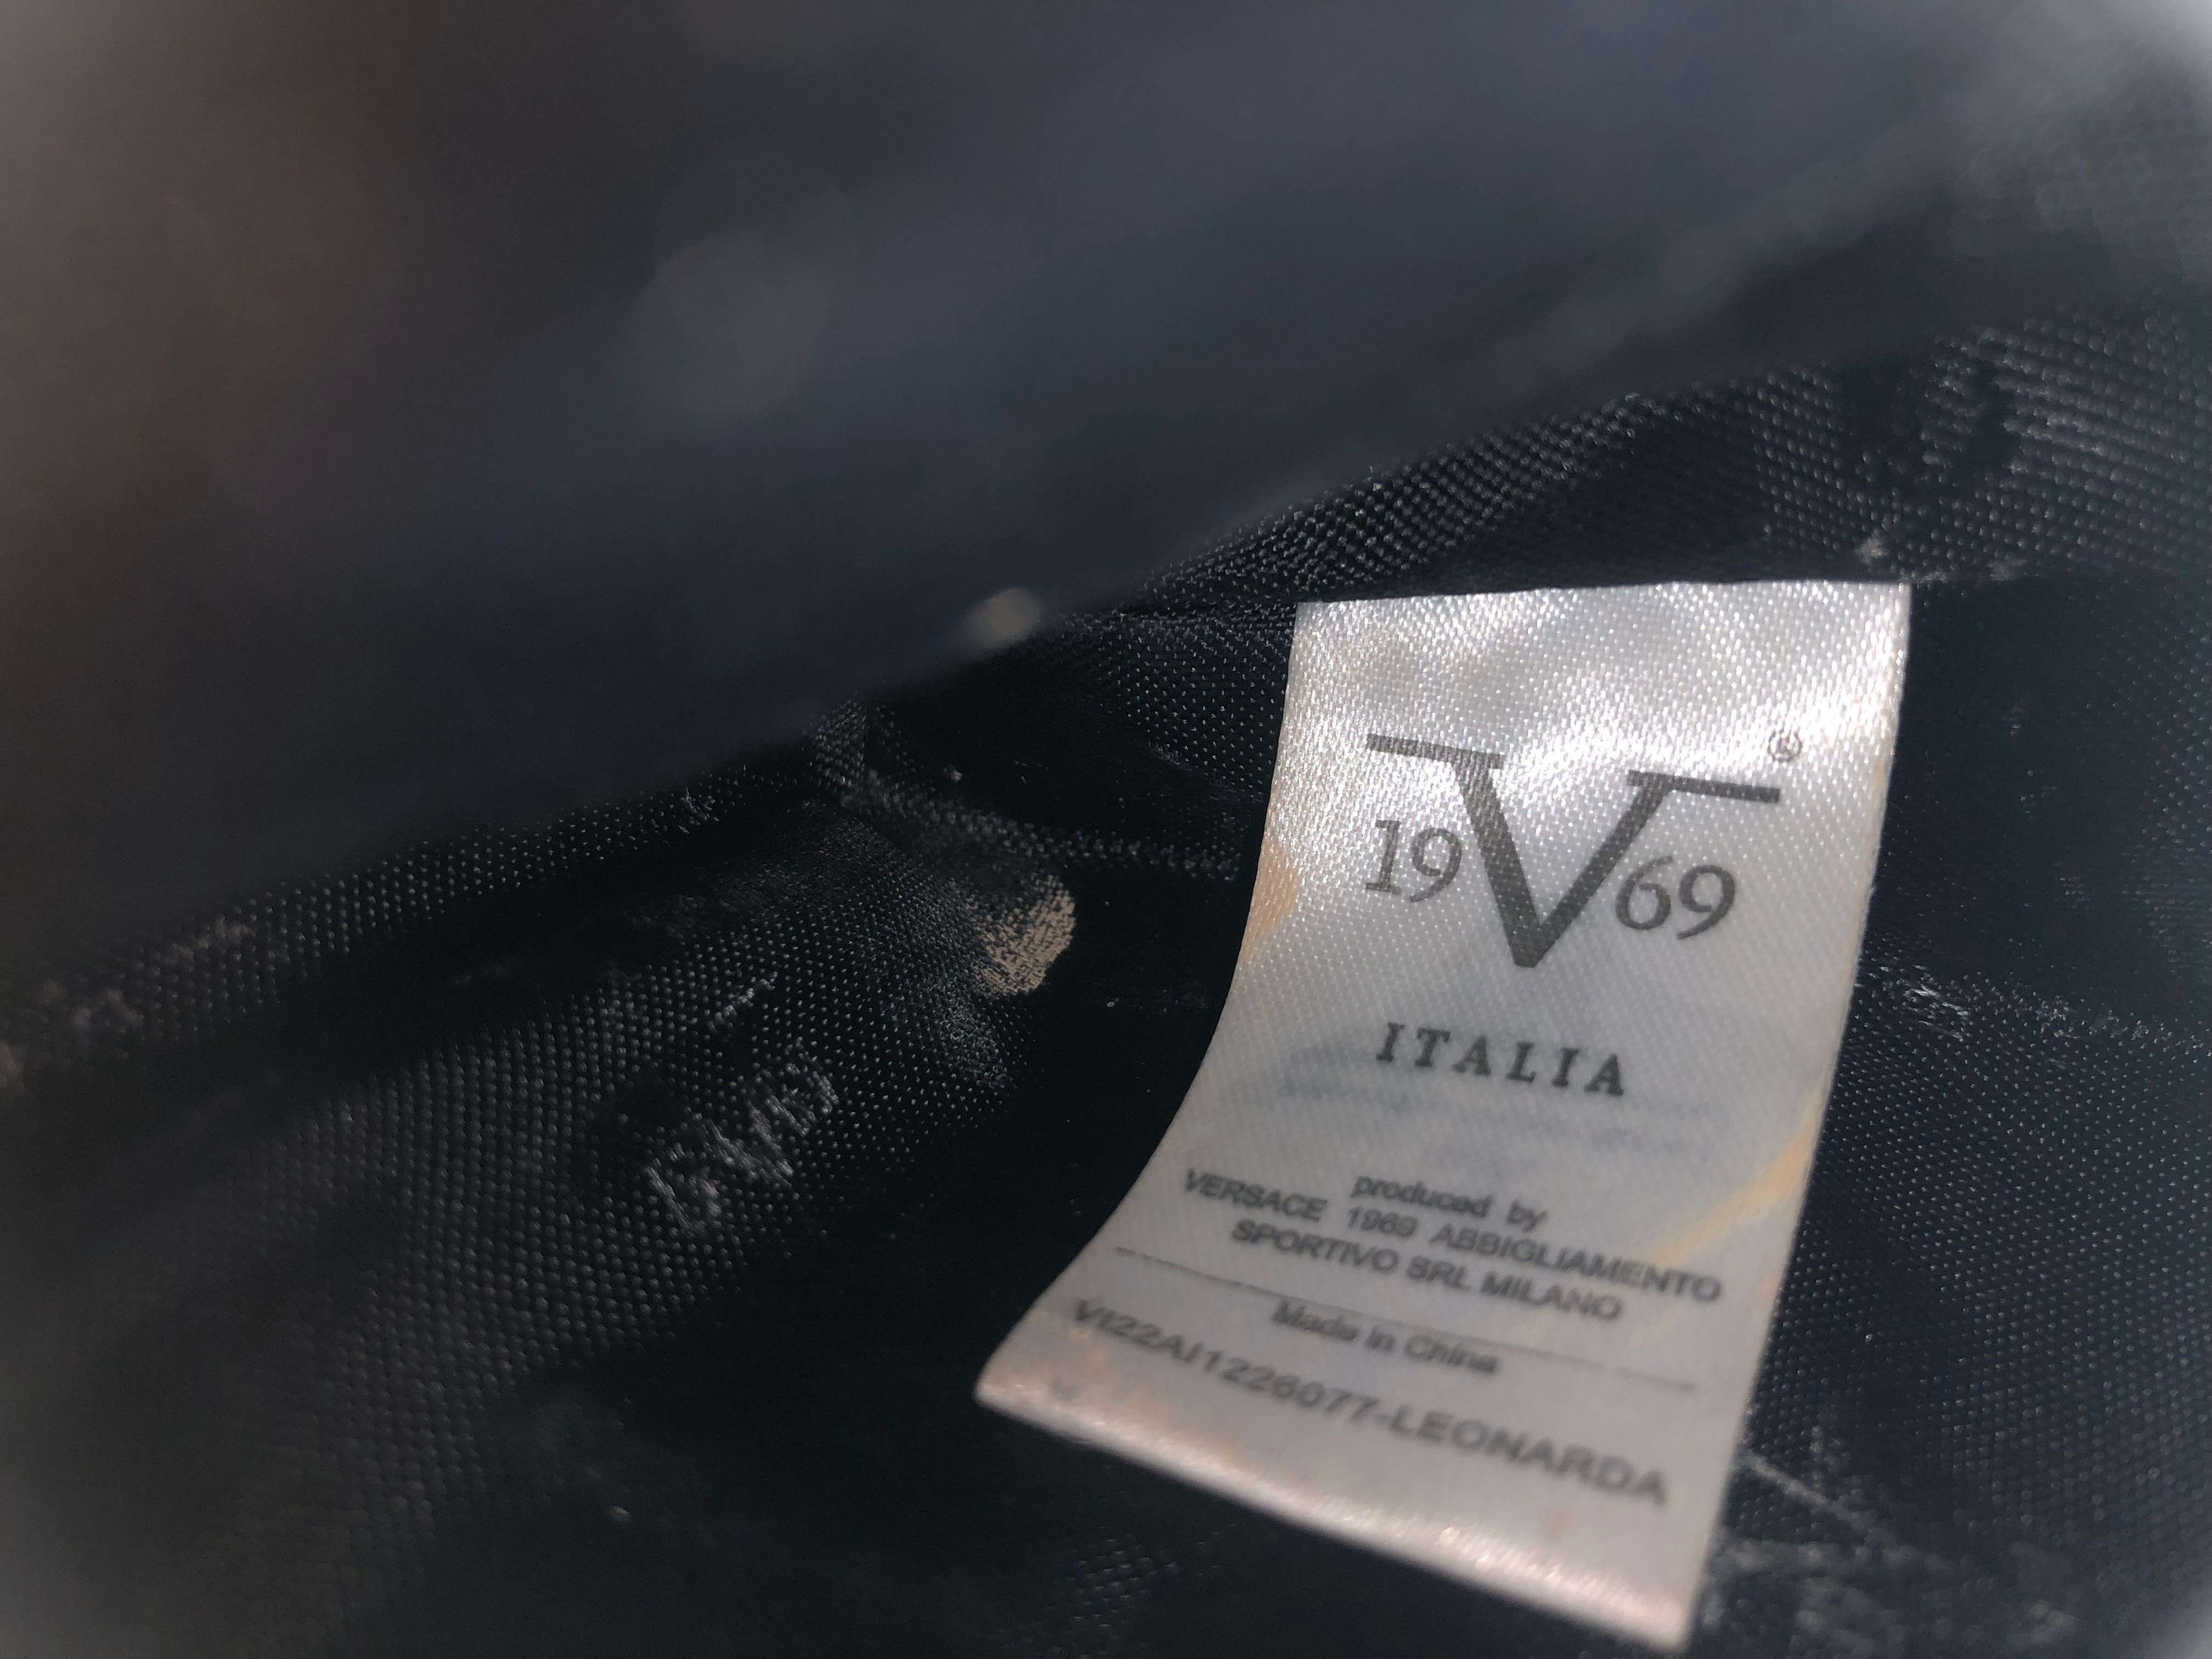 Italia by Versace czarna torebka,listonoszka lancuszek